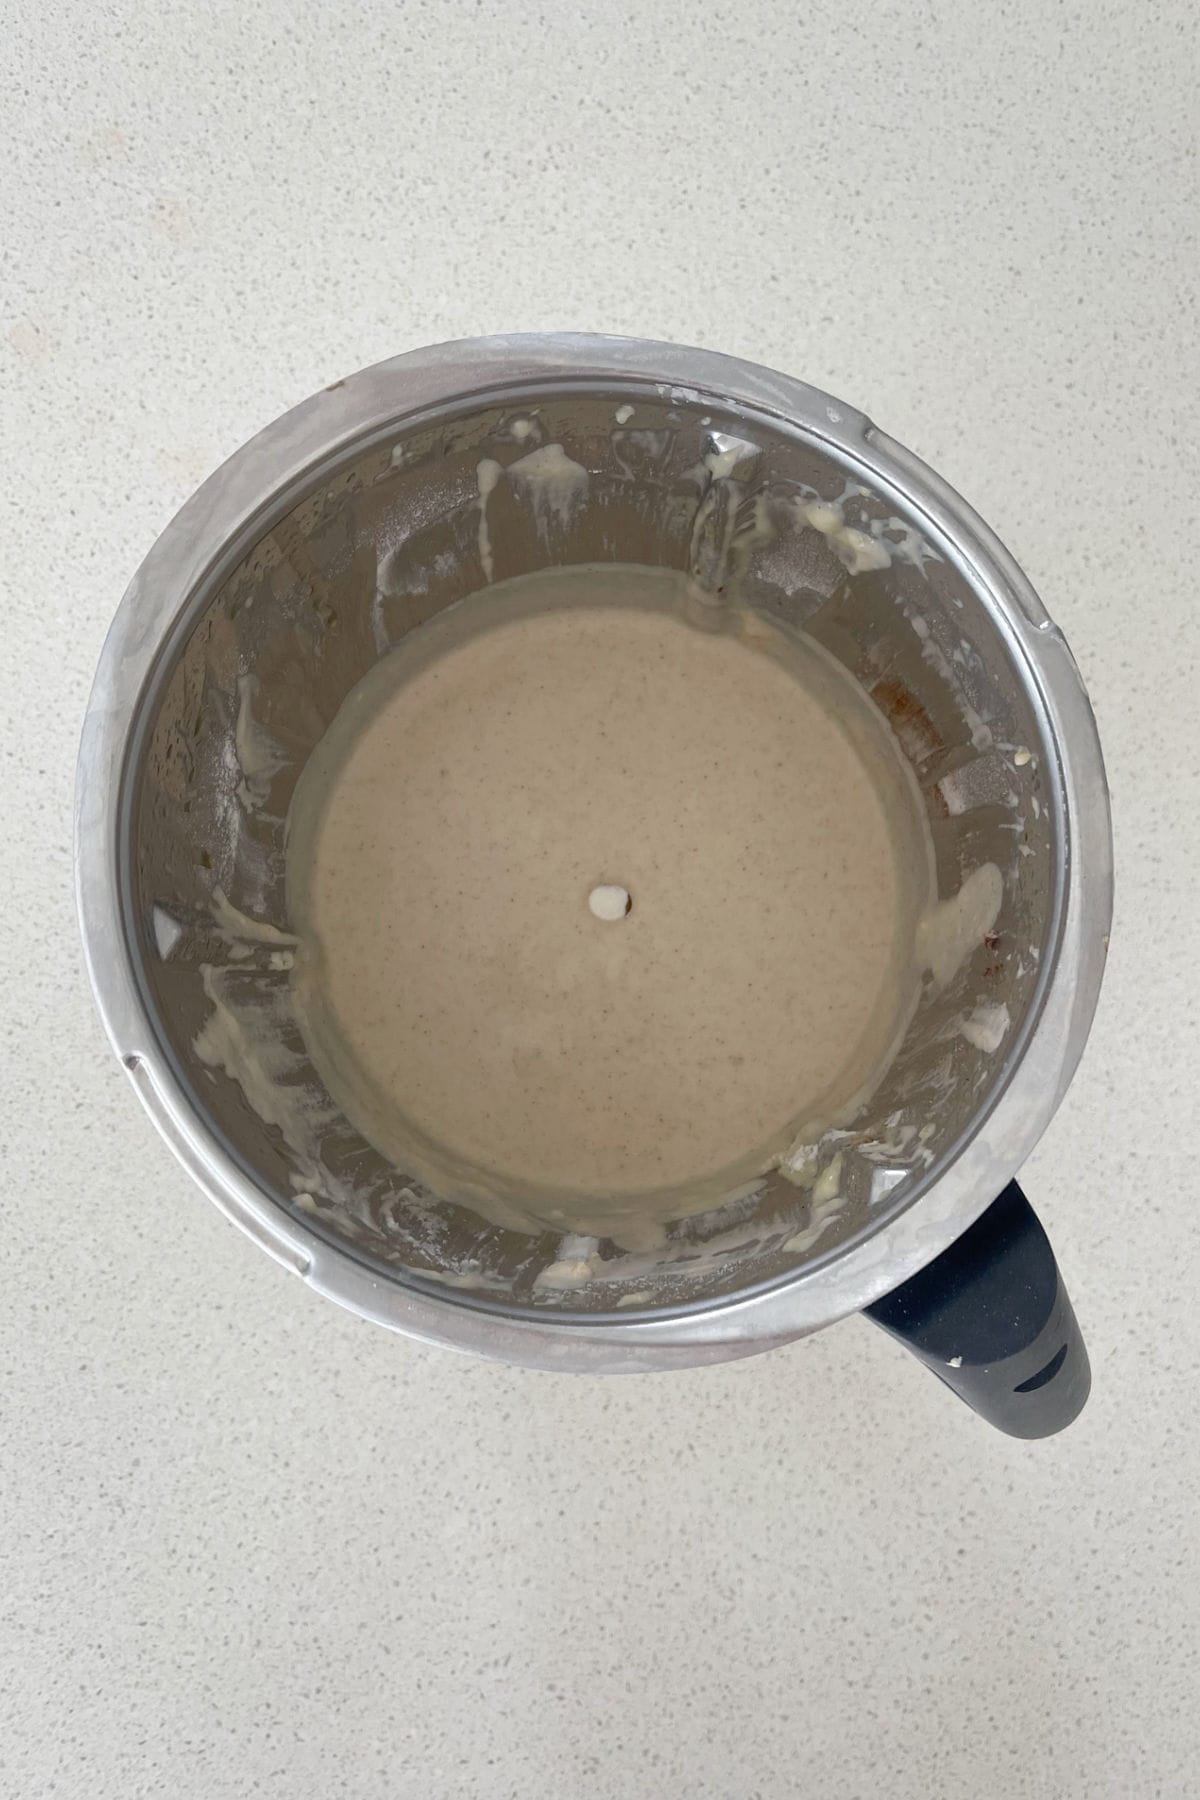 Banana Pancake Batter in a Thermomix bowl.